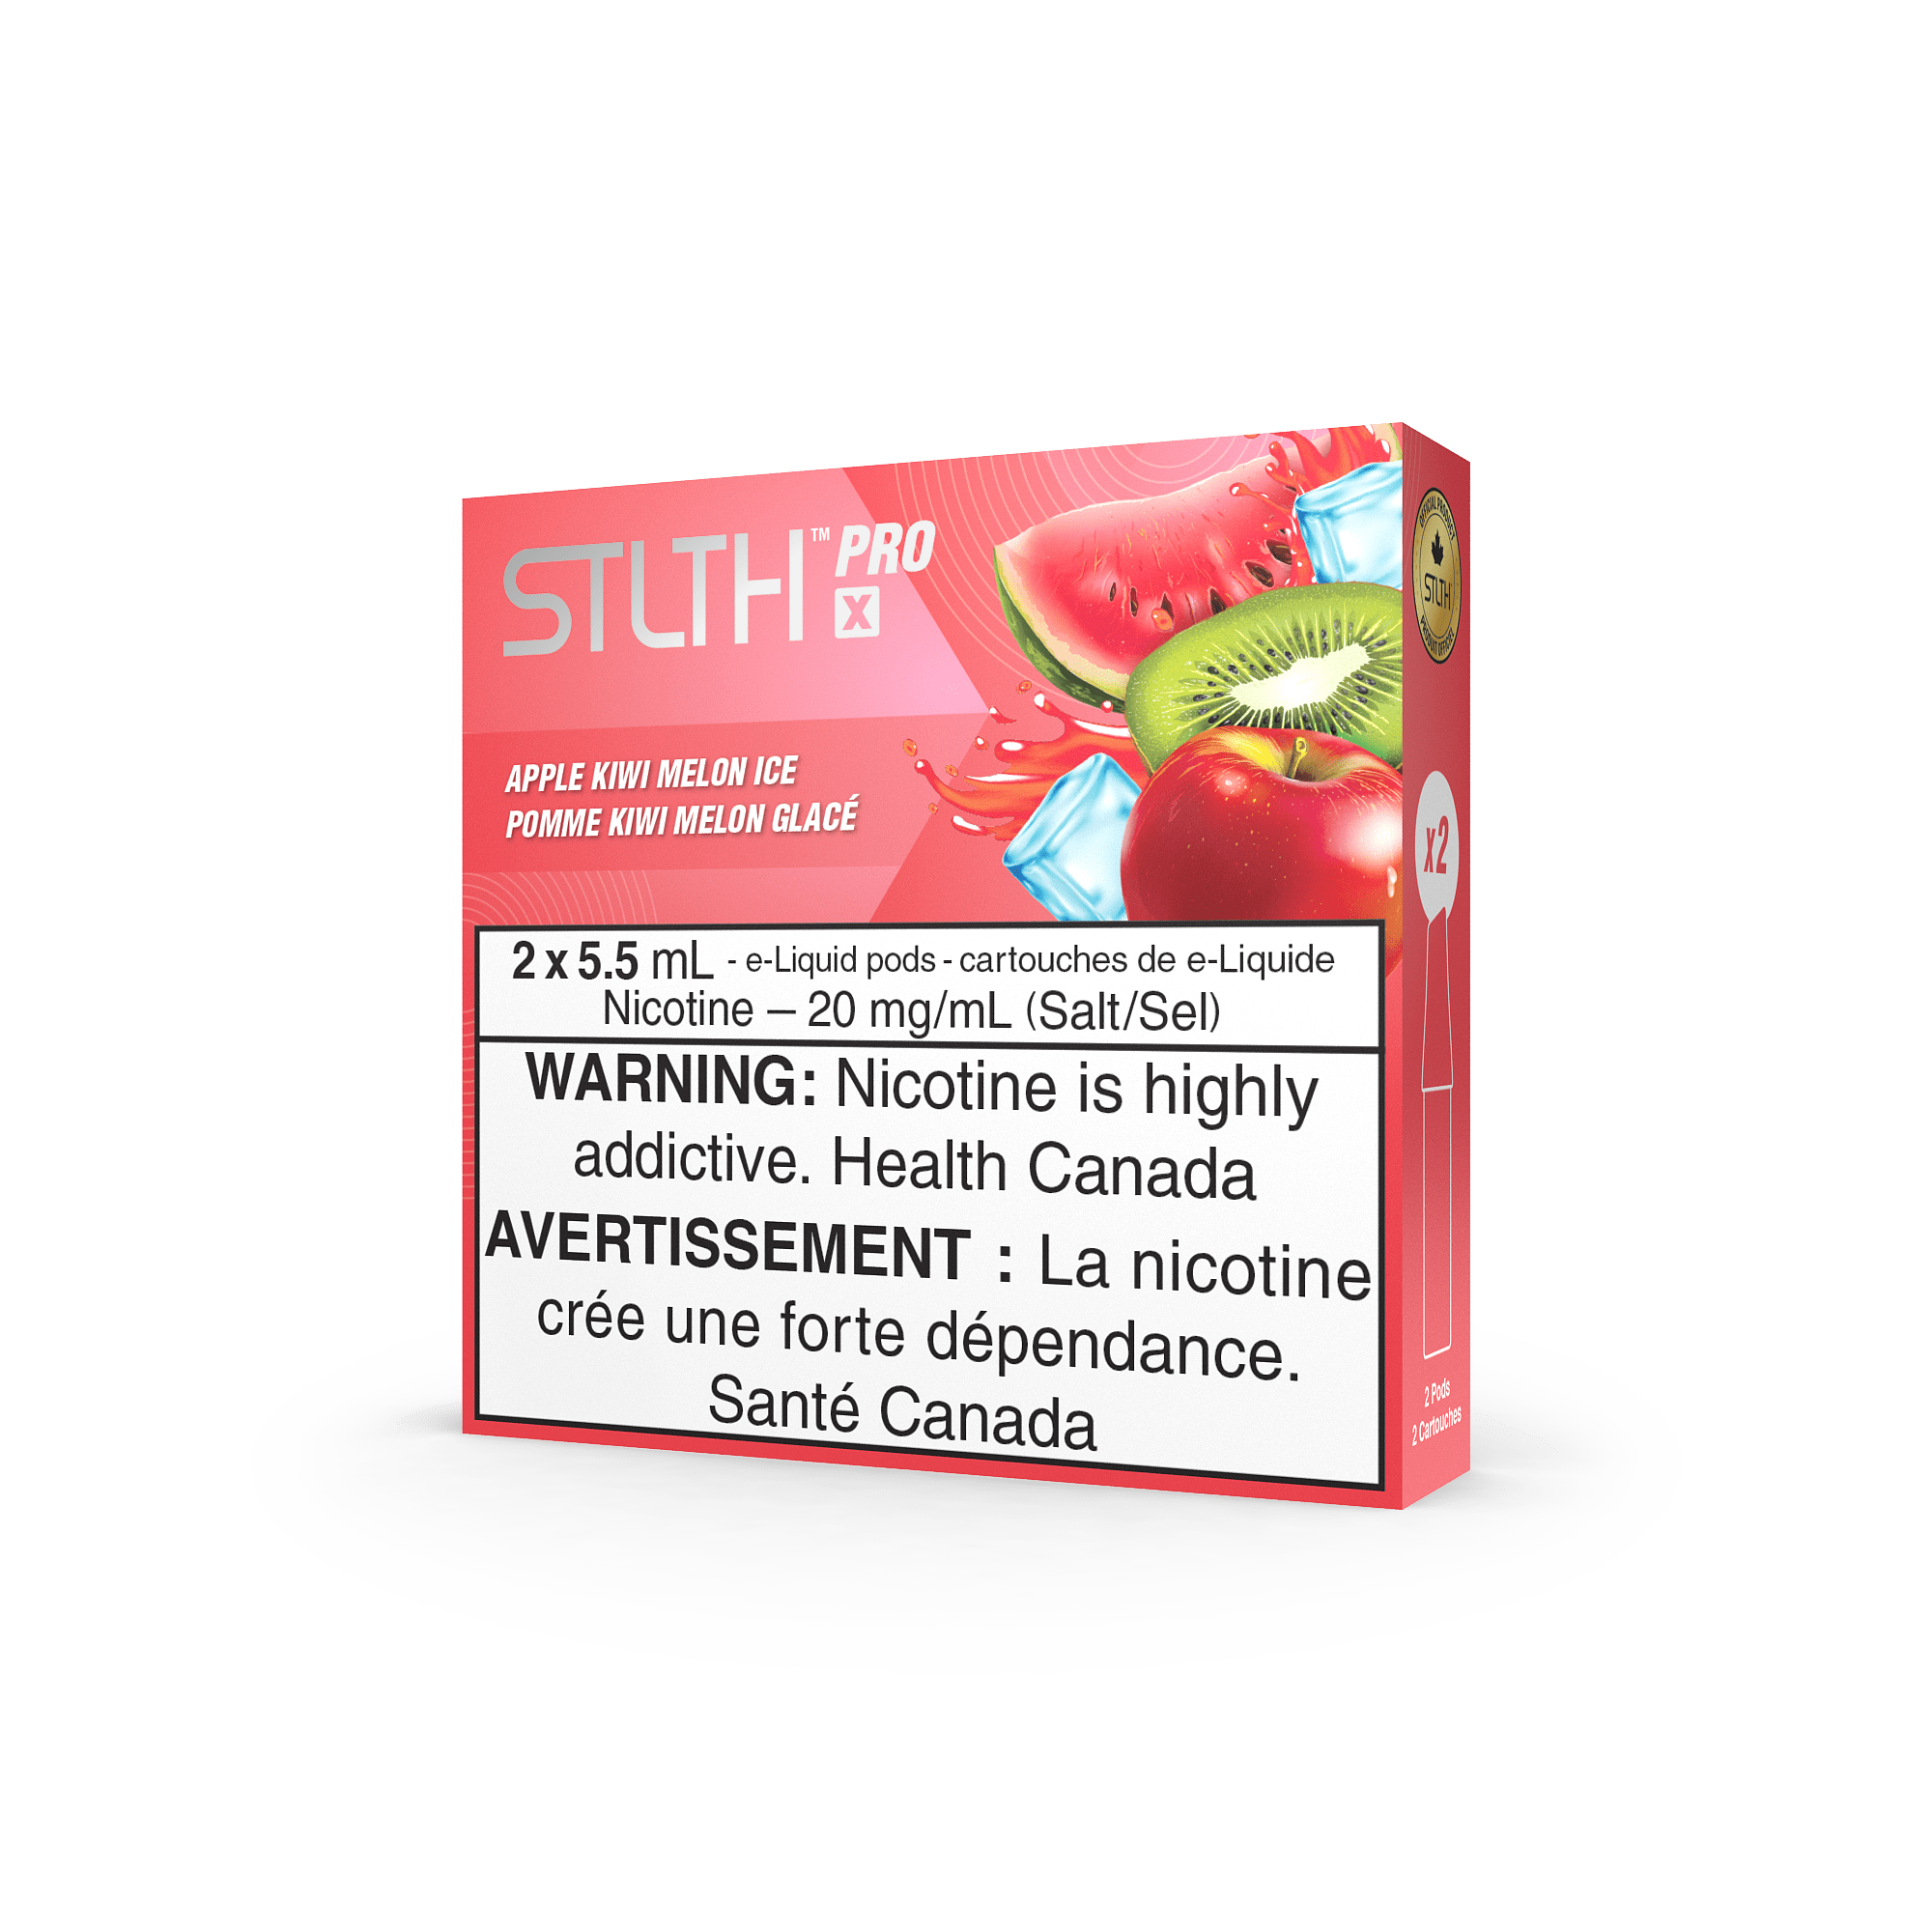 STLTH Pro X - Apple Kiwi Melon Ice Vape Pod available on Canada online vape shop